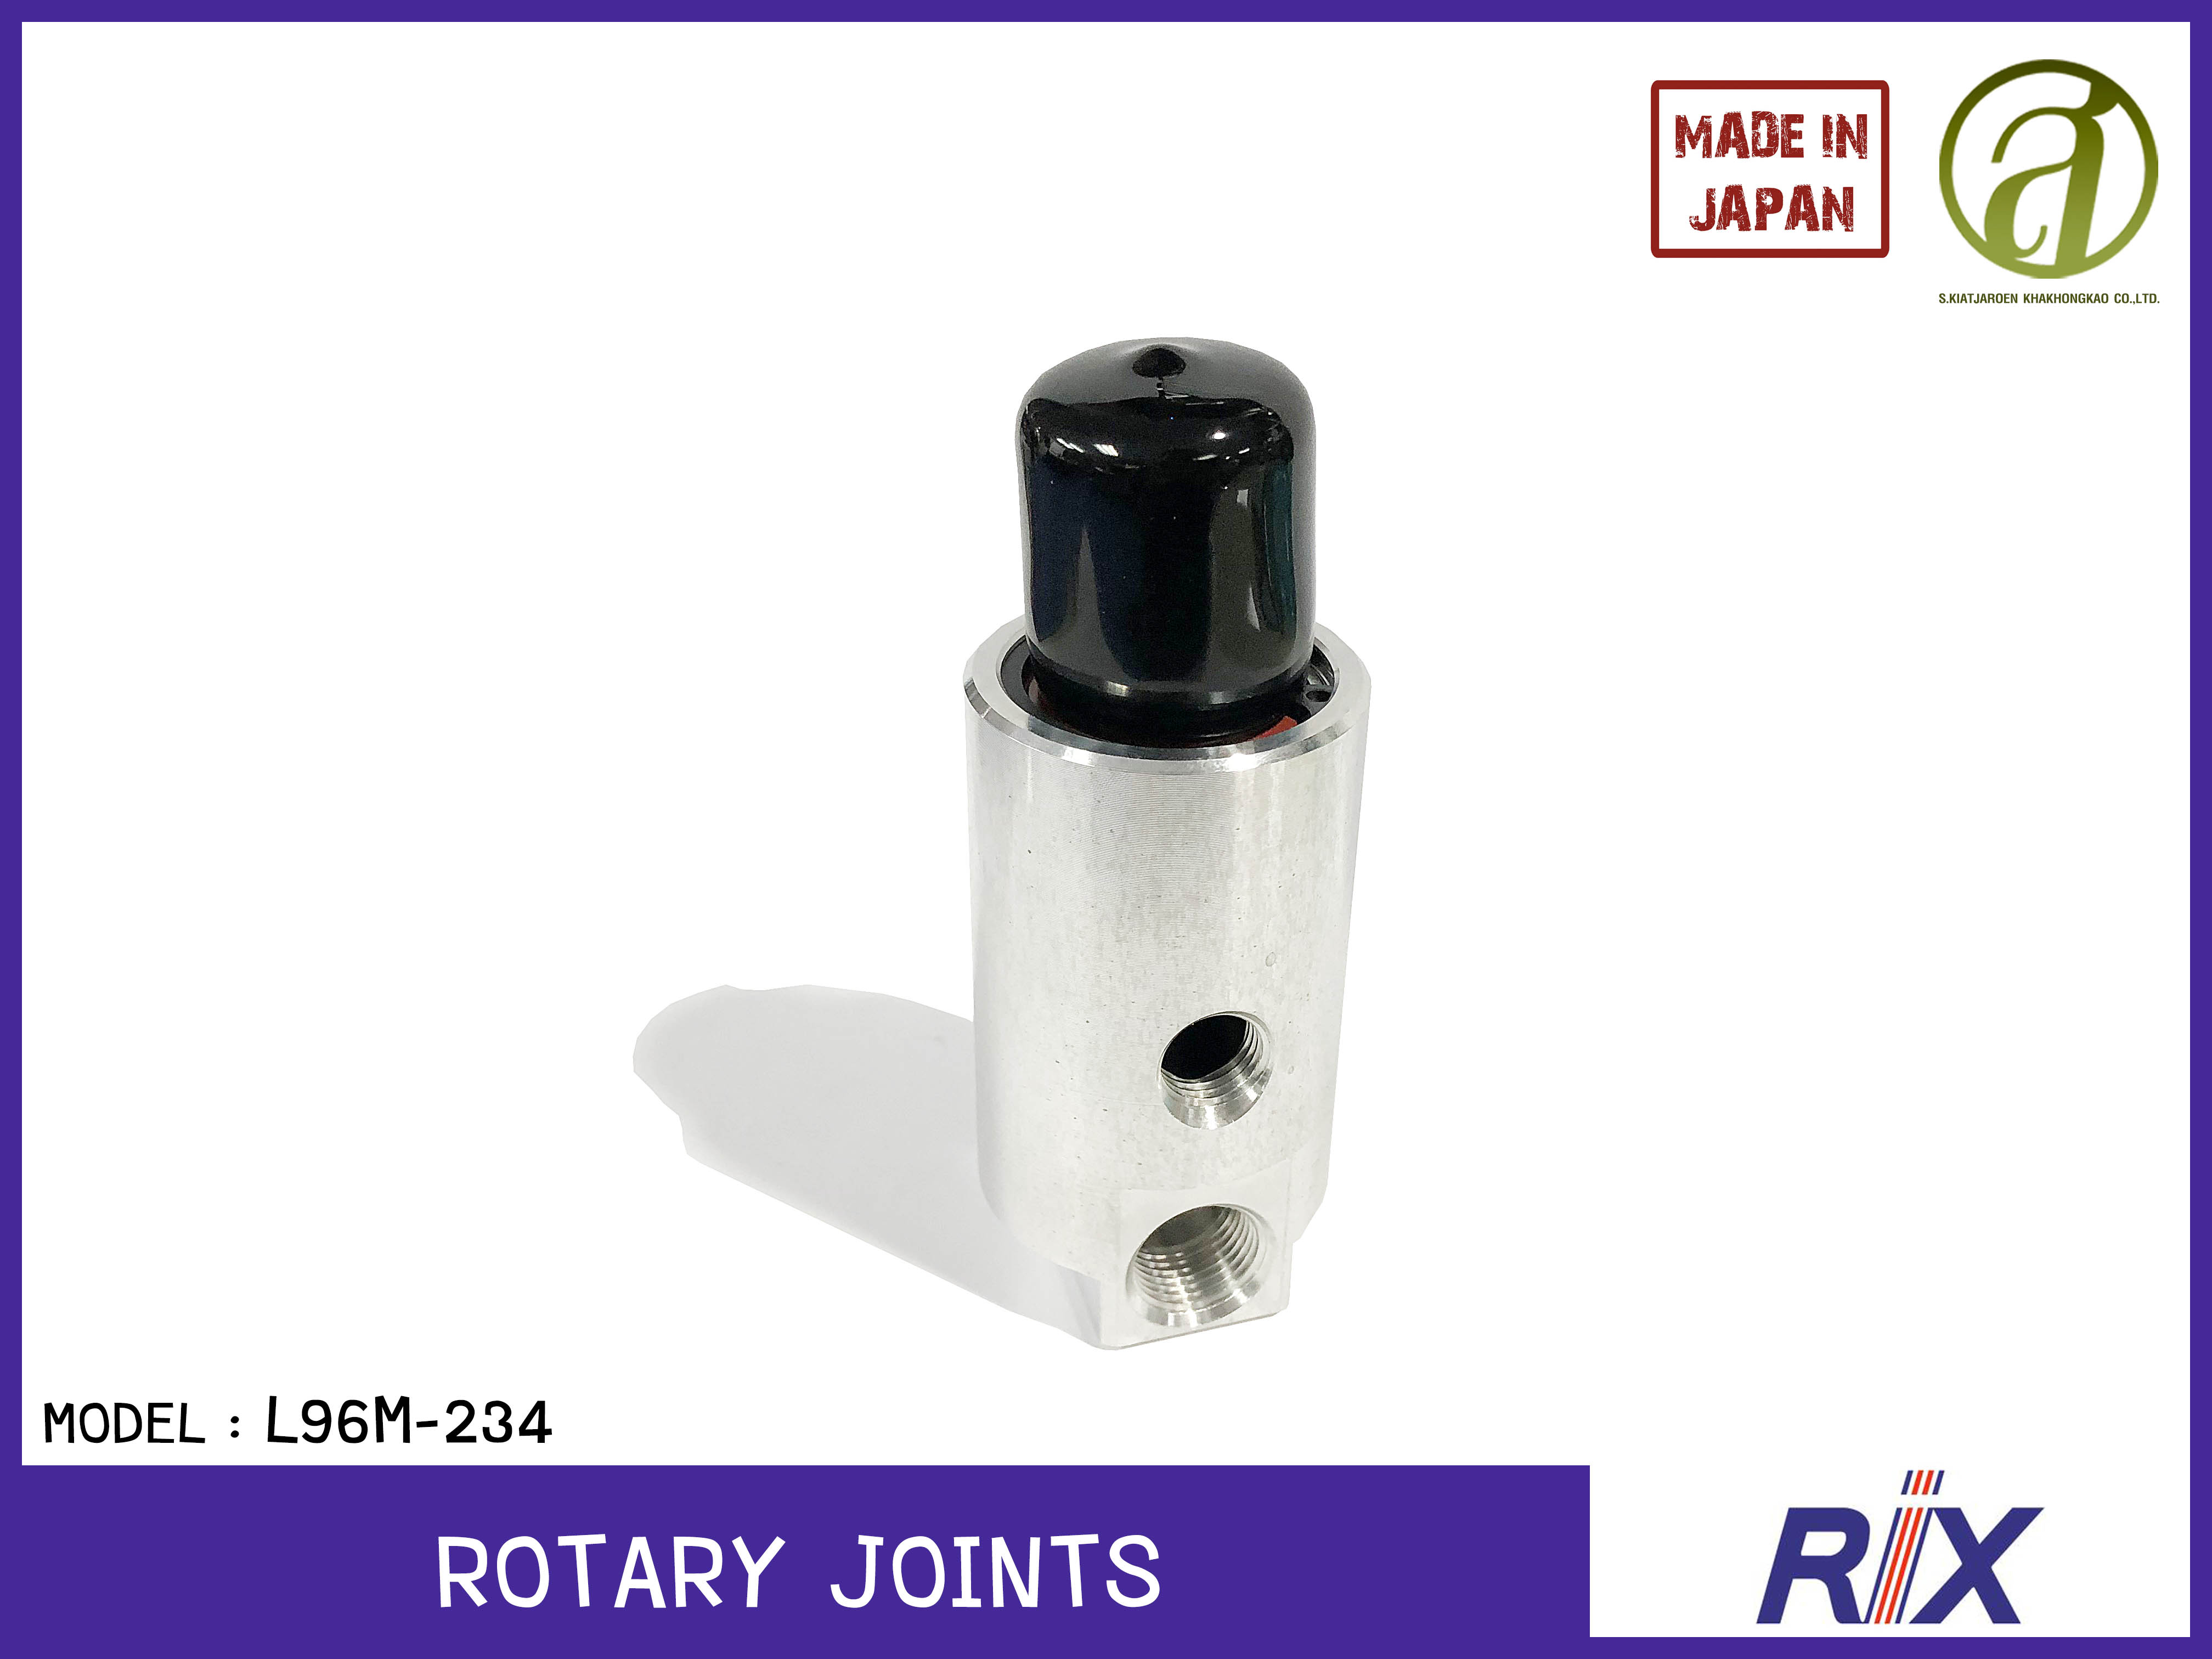 RIX โรตารี่ จ๊อยท์ Rotary Joints รุ่น L96M-234